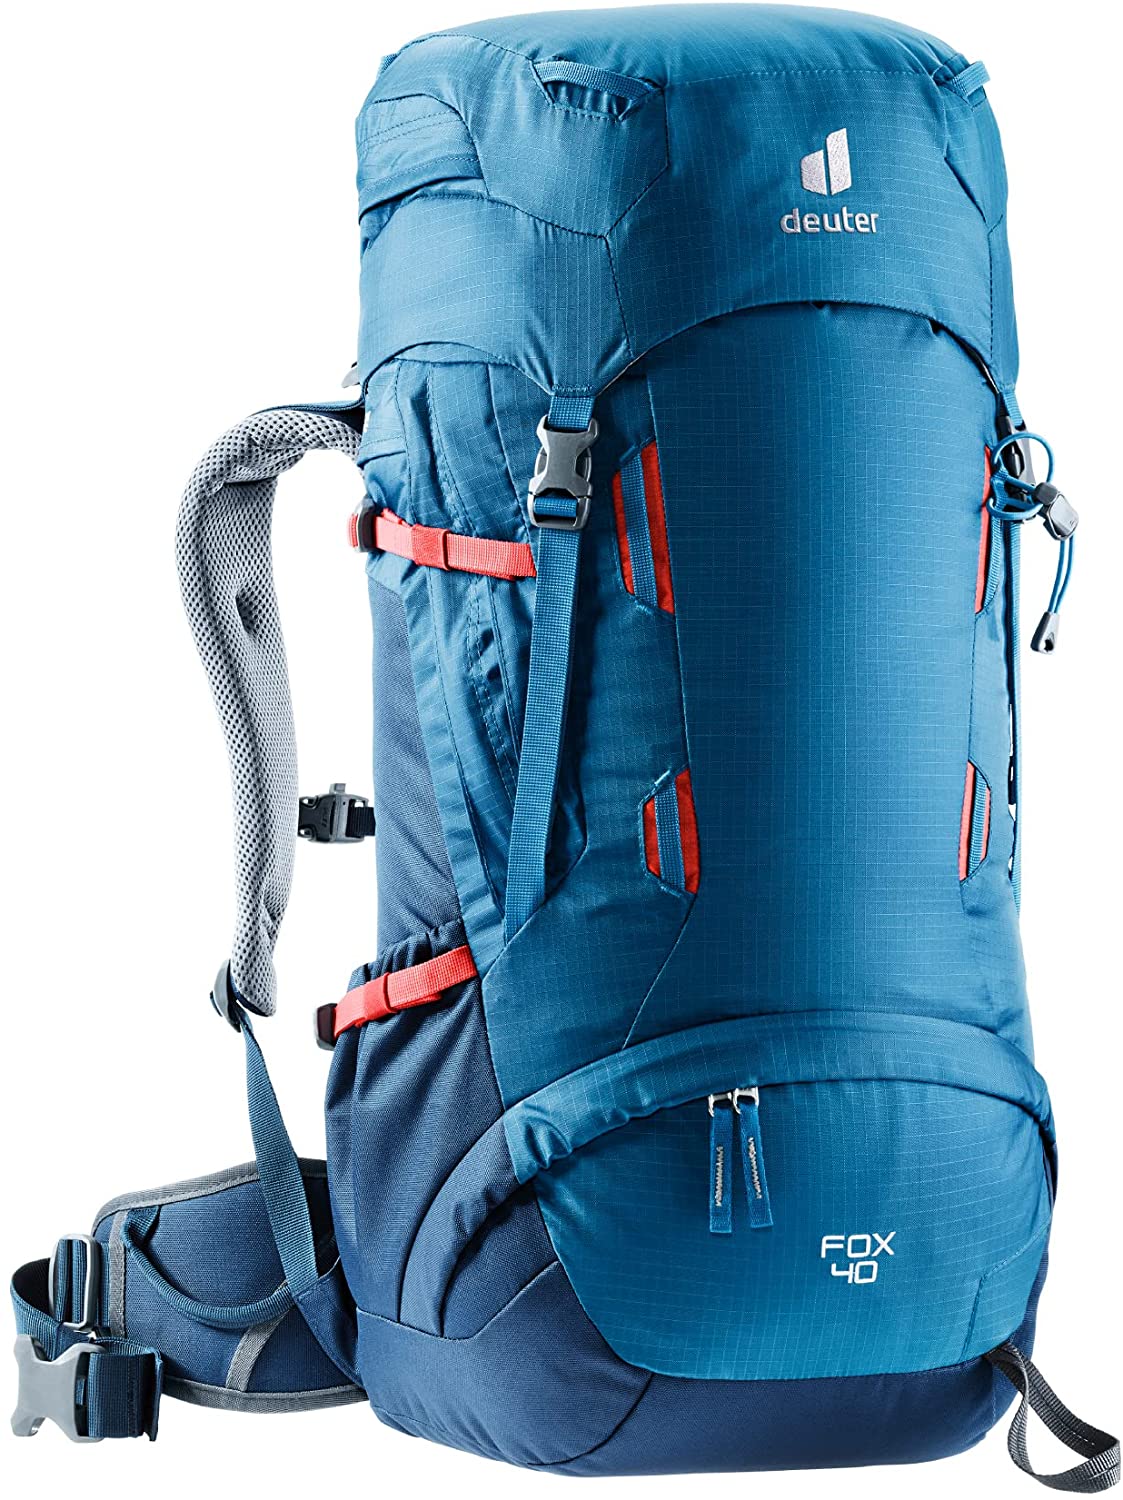 Best Overall Hiking Backpack for Kids - Deuter Fox 40 Kid's Backpack